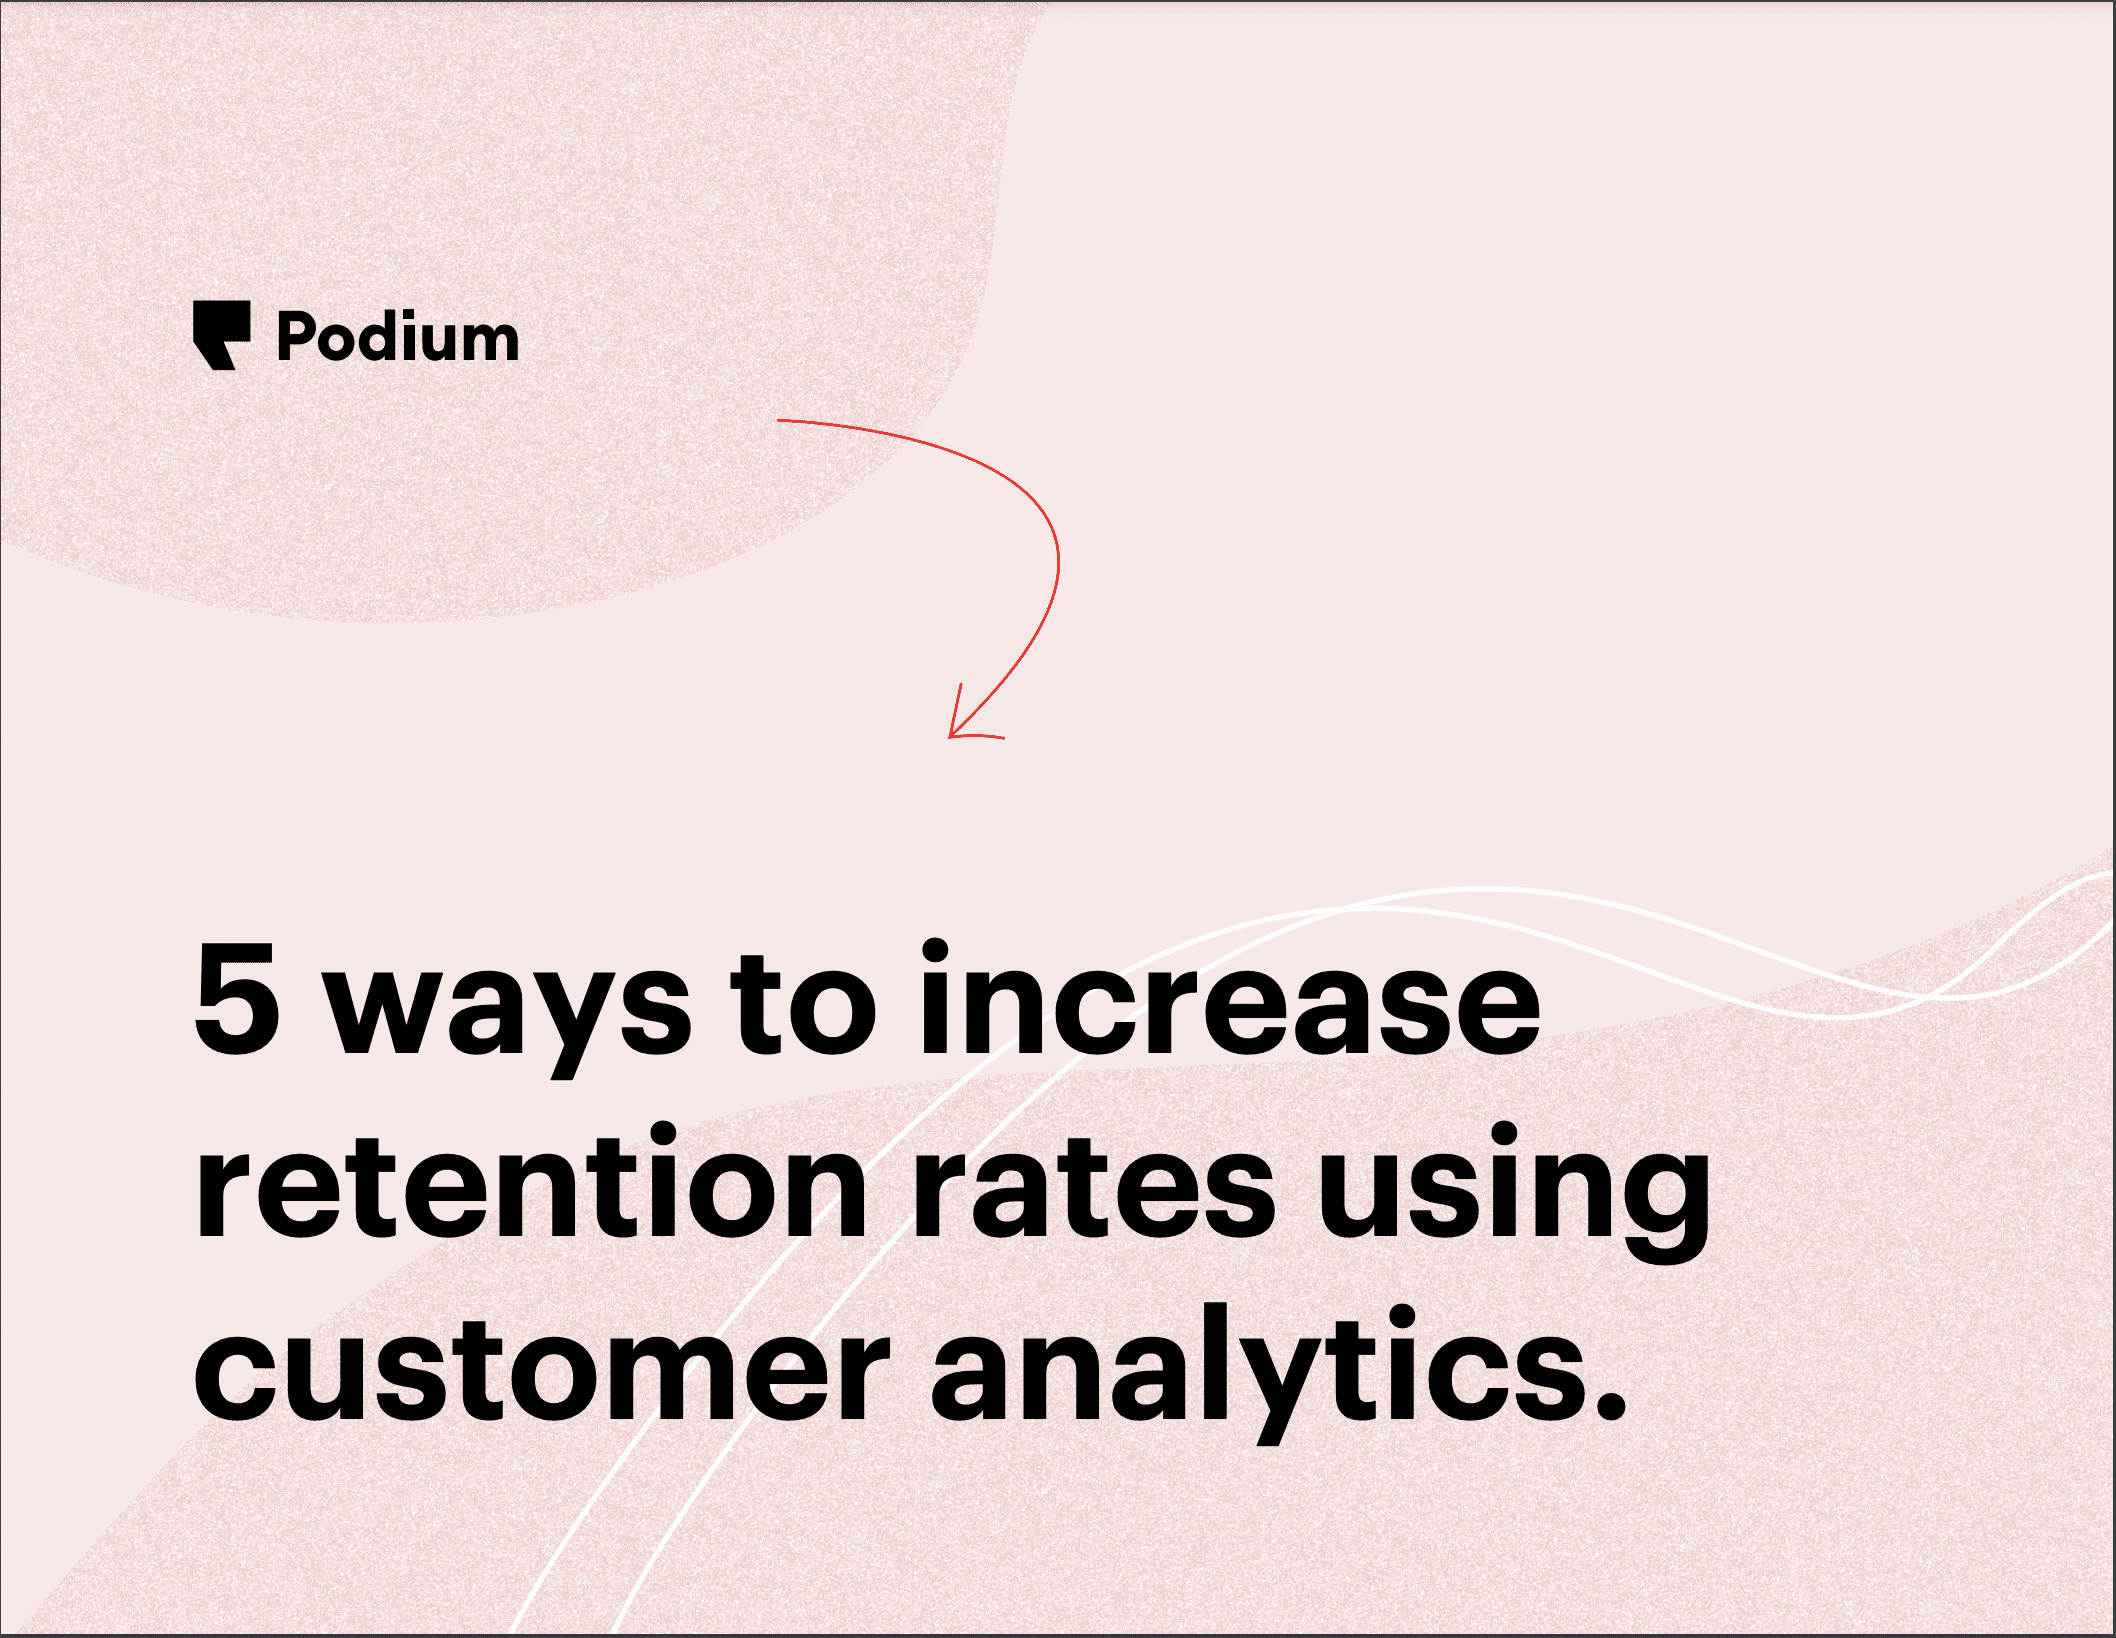 5 ways to increase retention rates using customer analytics.